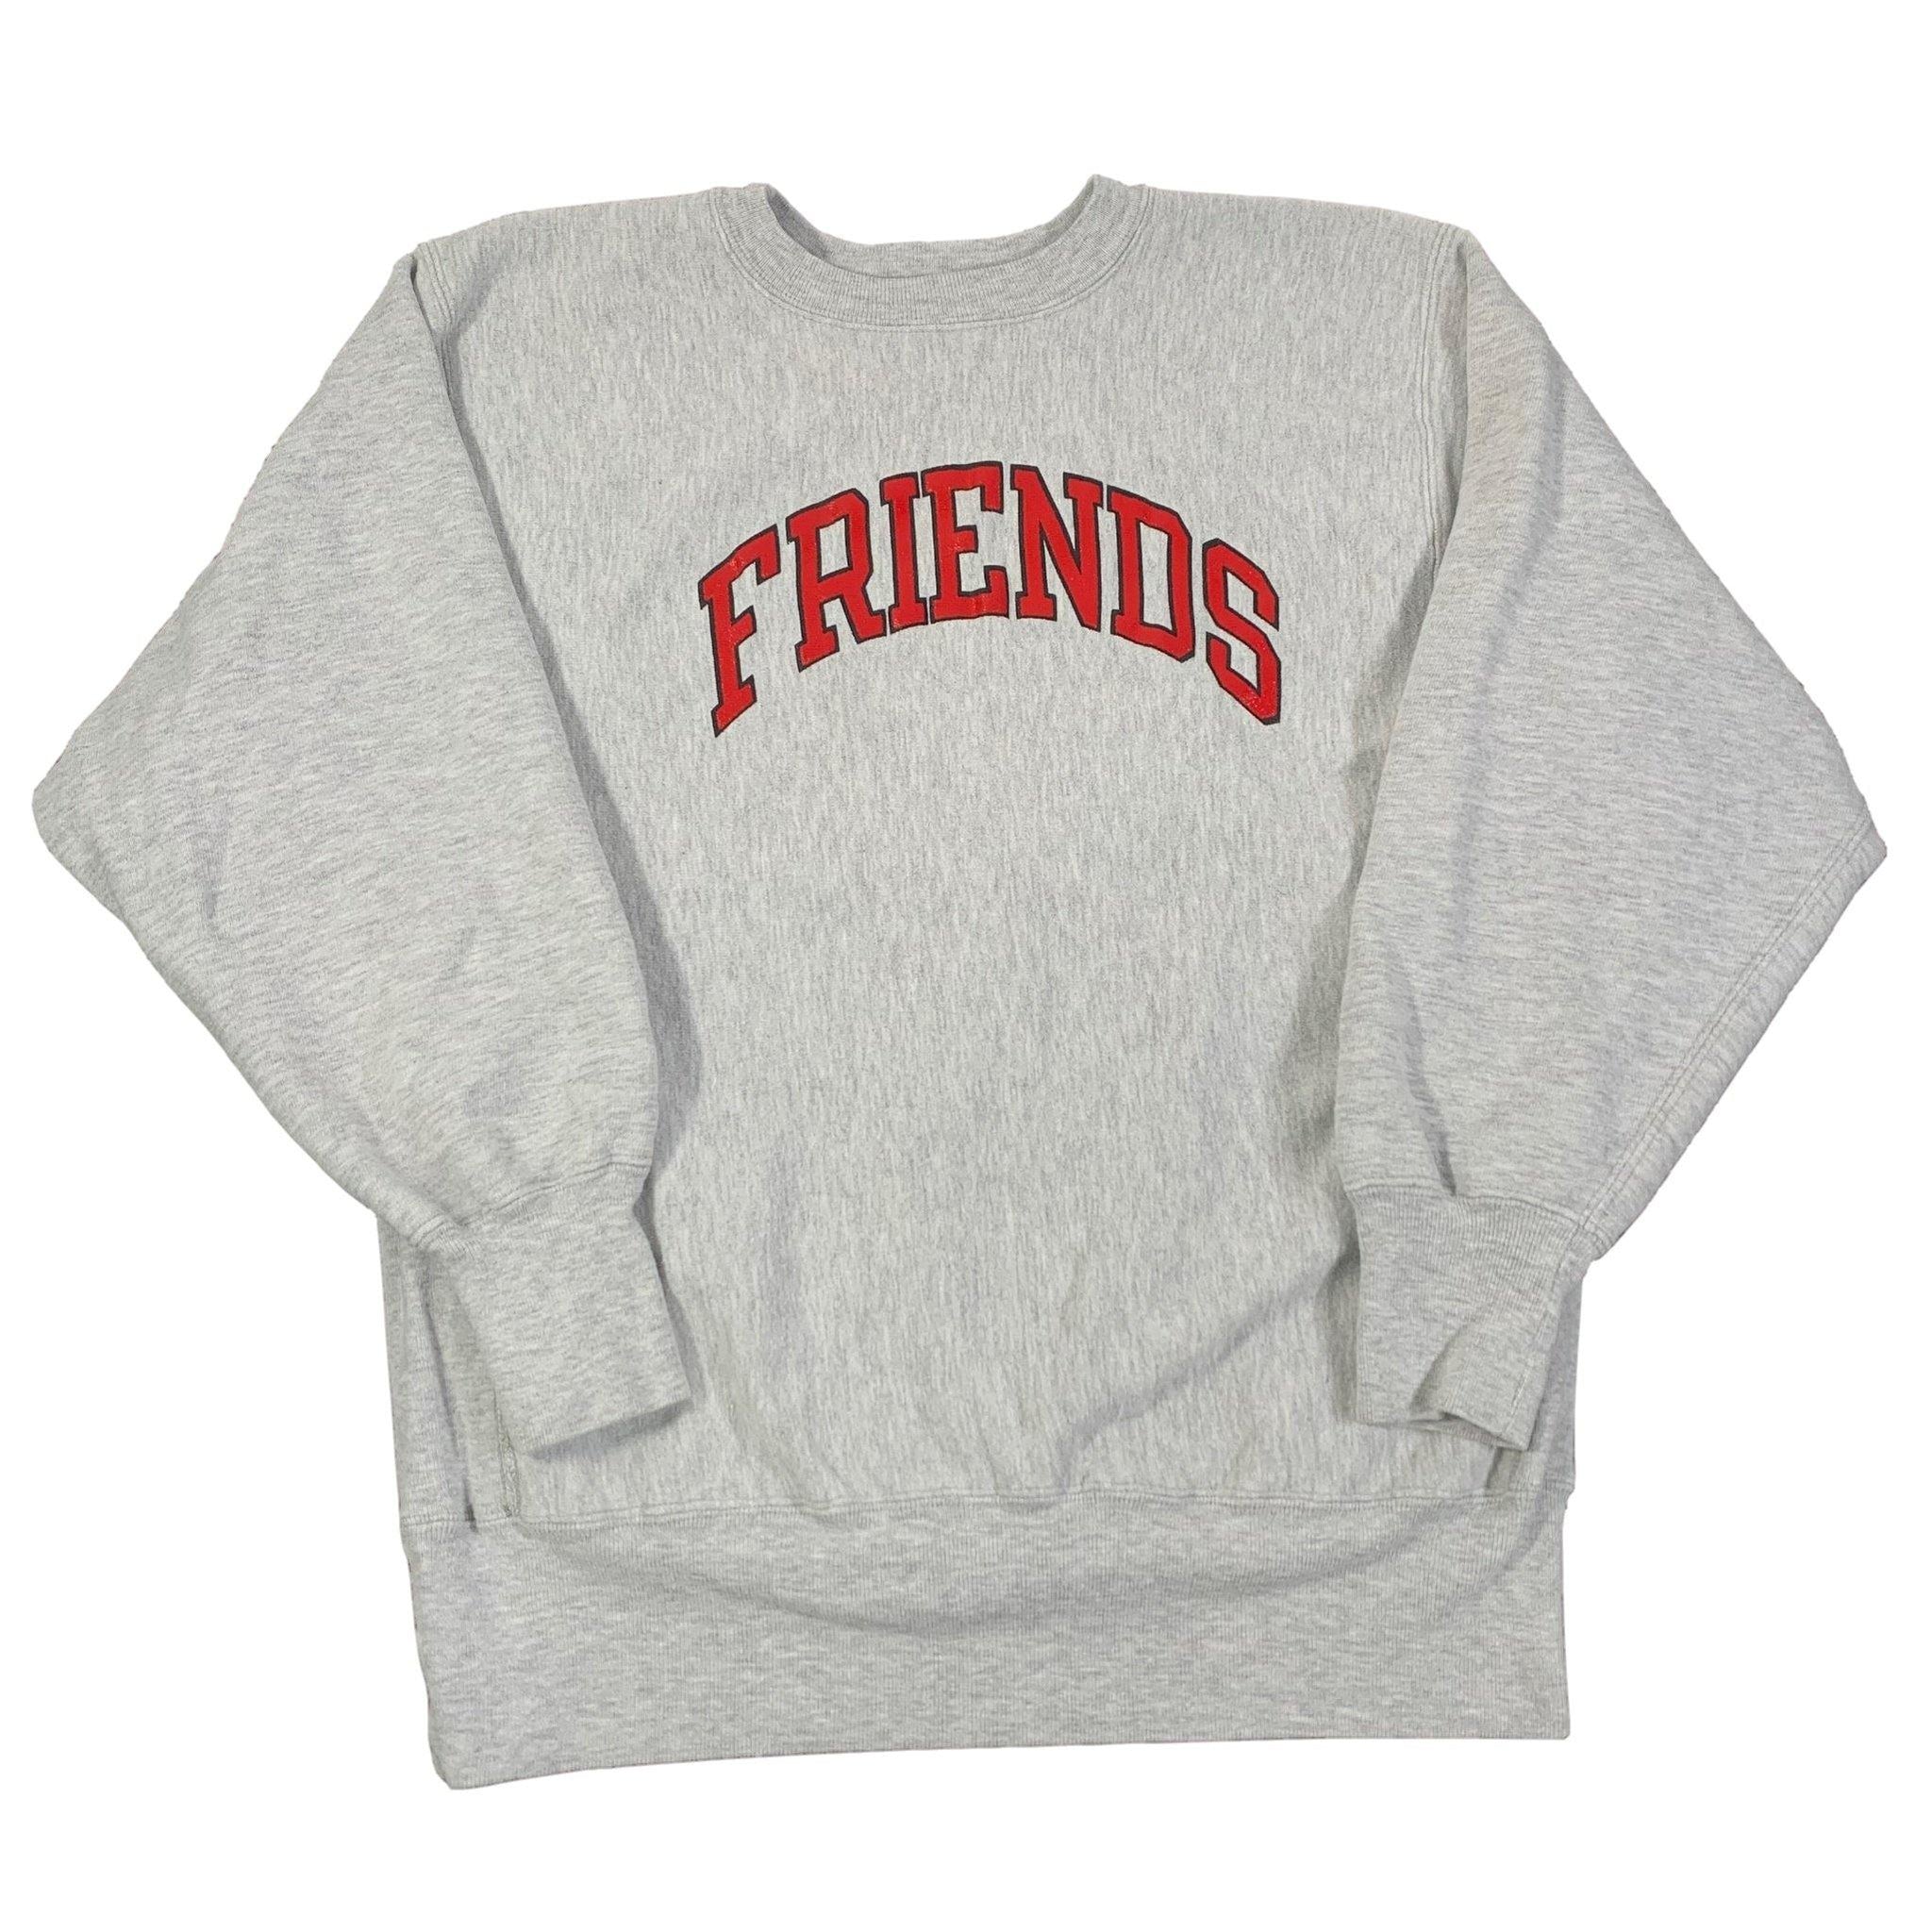 Reverse Weave "Friends" Crewneck Sweatshirt jointcustodydc